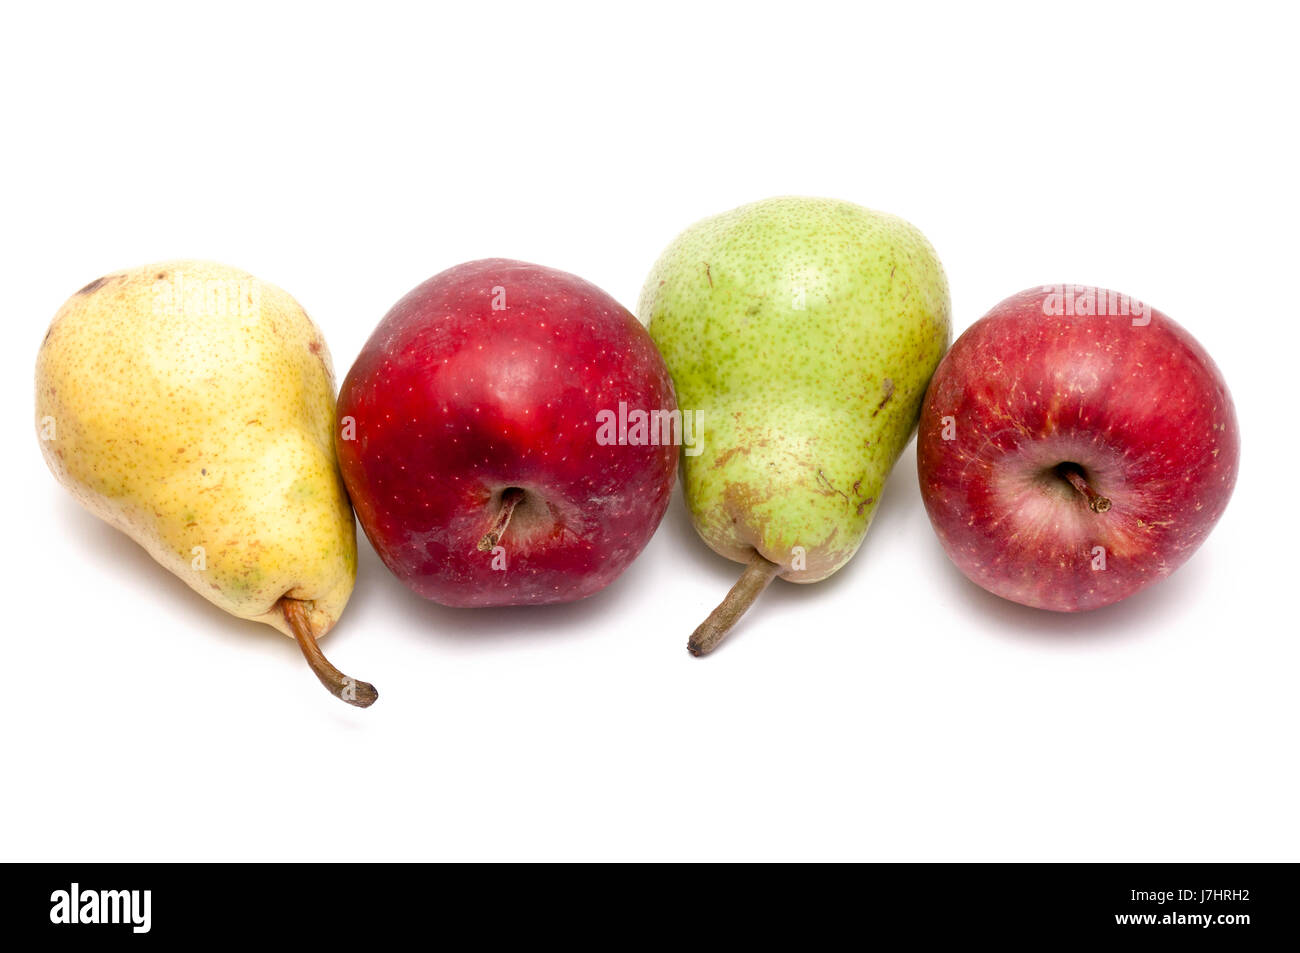 Vitamina frutta mela mela pera lampadina aliment cibo salute vitamina di pelle verde Foto Stock